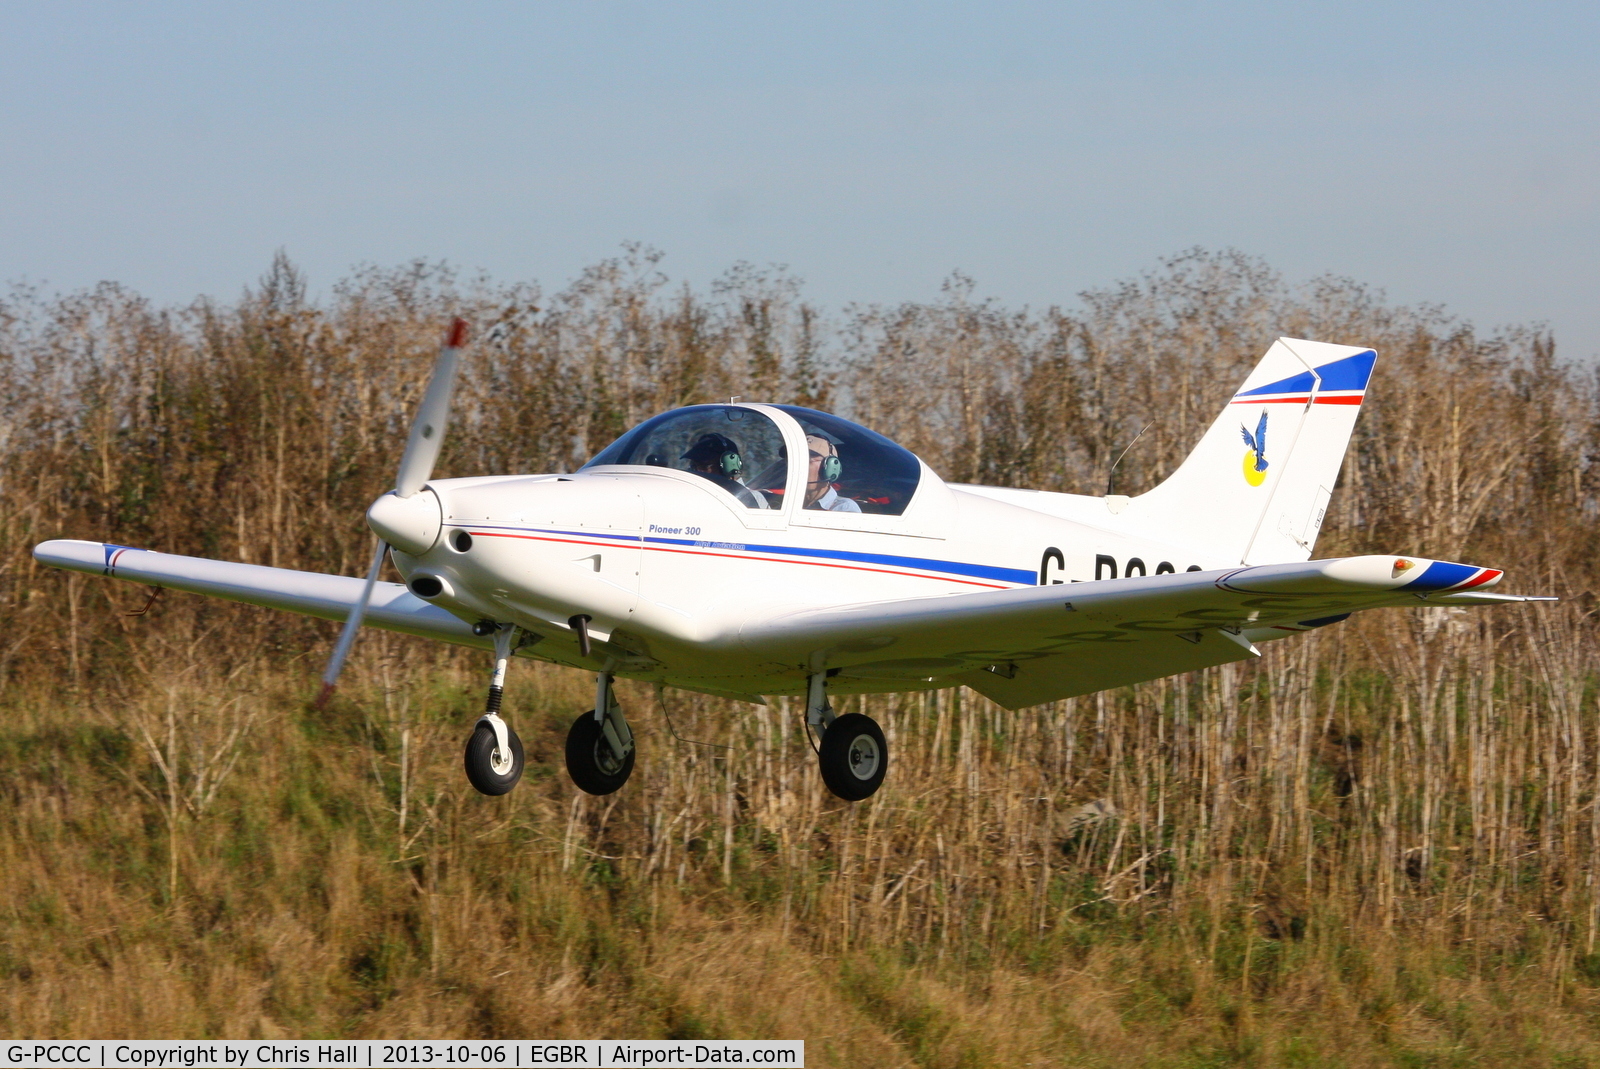 G-PCCC, 2004 Alpi Aviation Pioneer 300 C/N PFA 330-14220, at Breighton's Pre Hibernation Fly-in, 2013